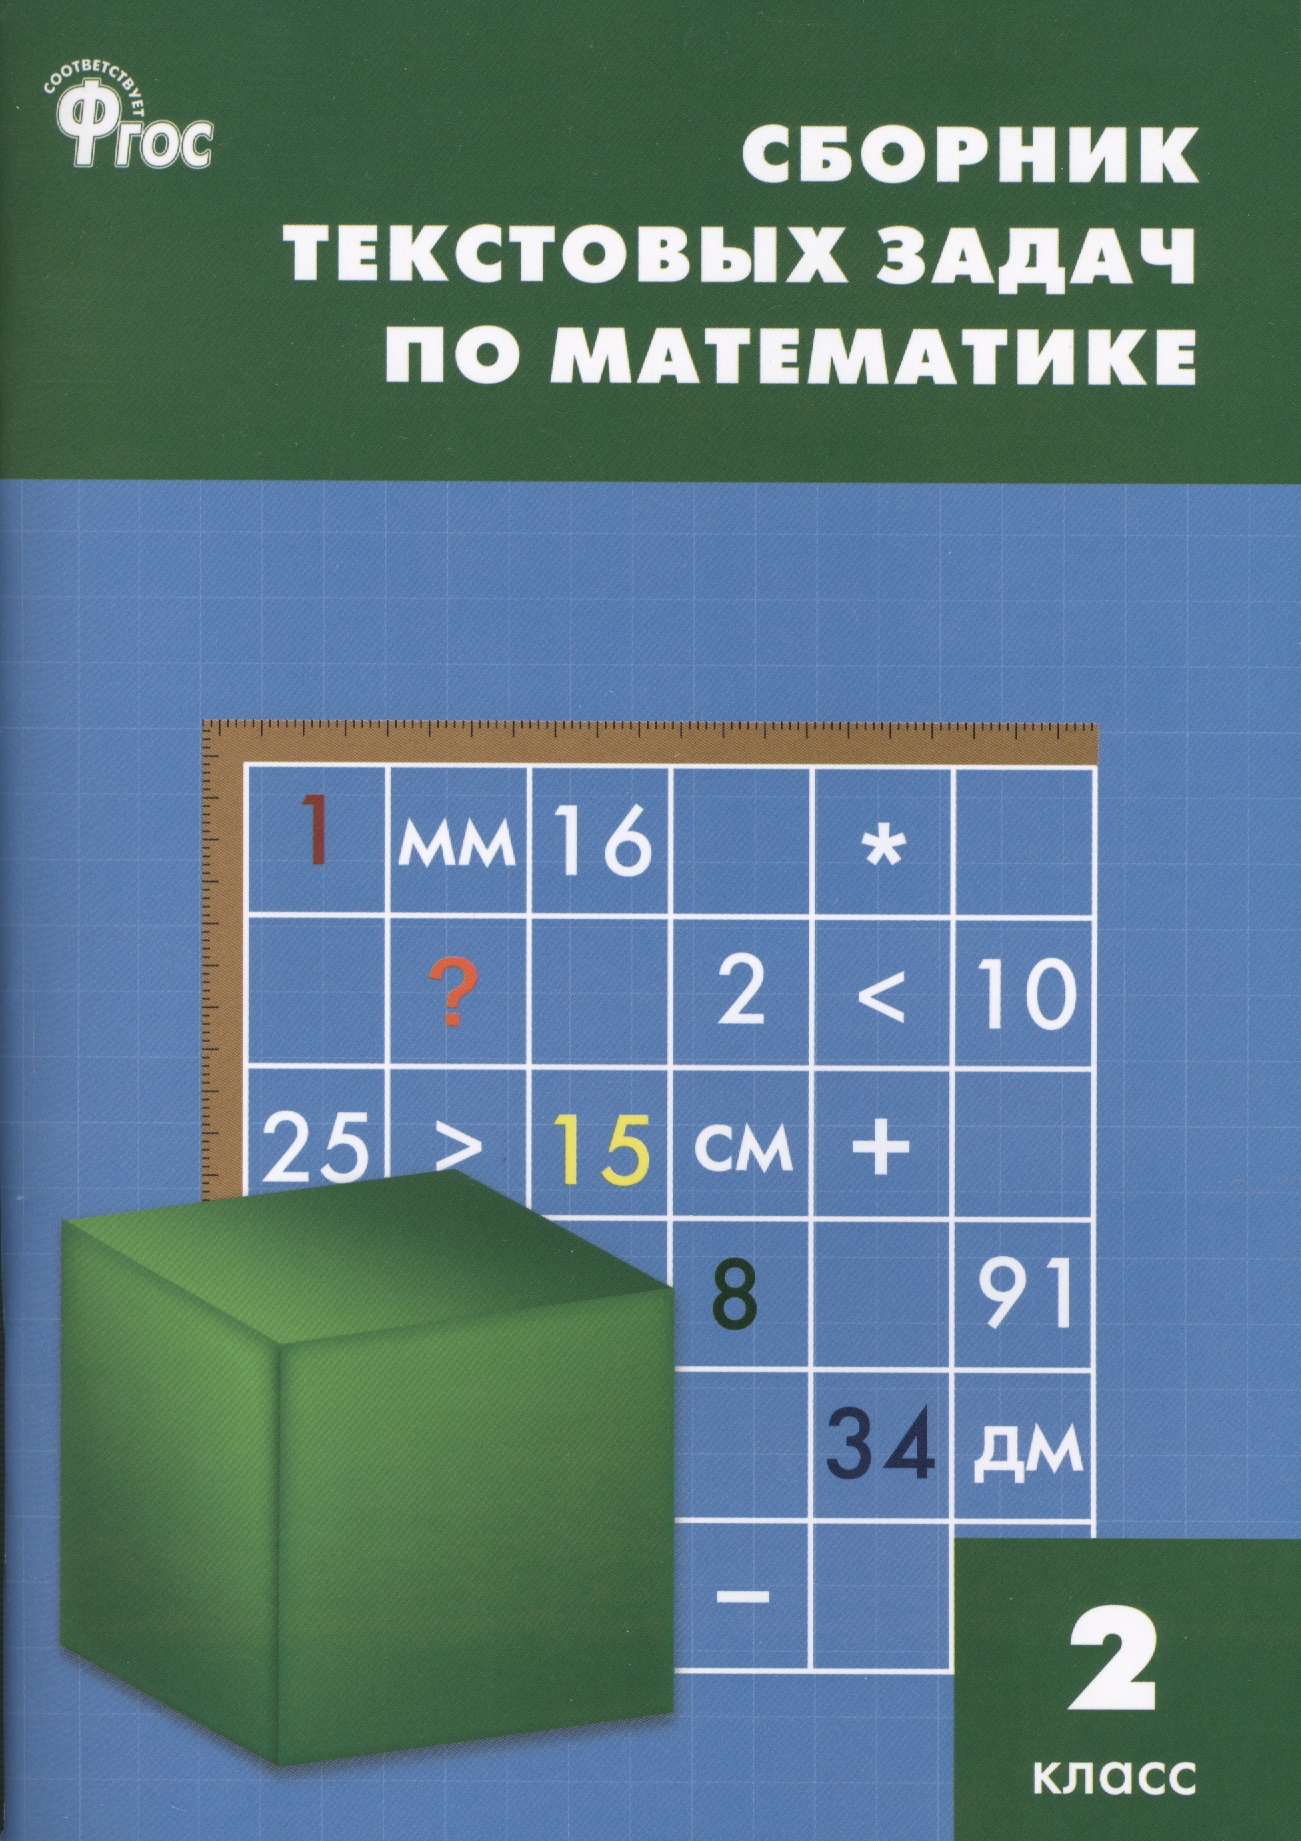 Математика большой сборник заданий